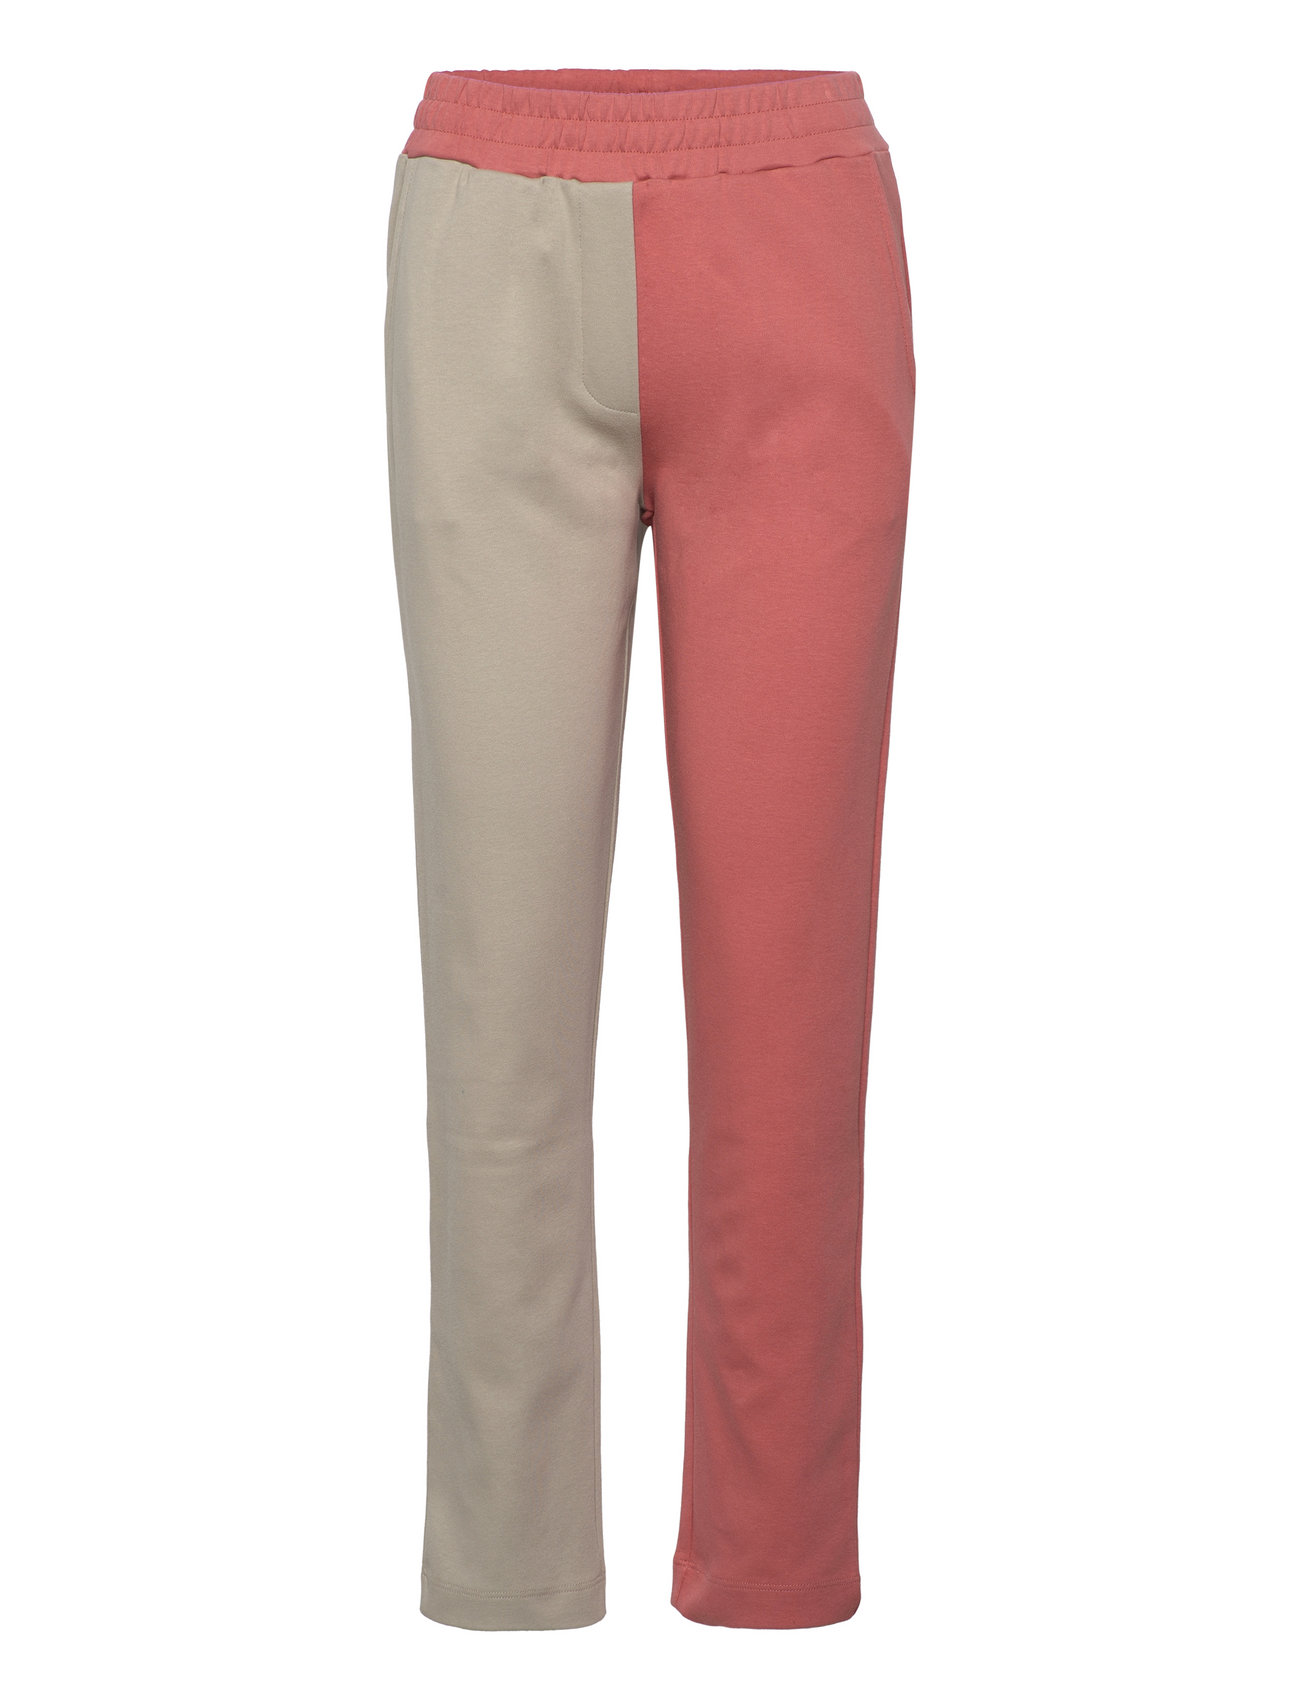 T. Saga Pants Gots Bottoms Trousers Joggers Multi/patterned Basic Apparel